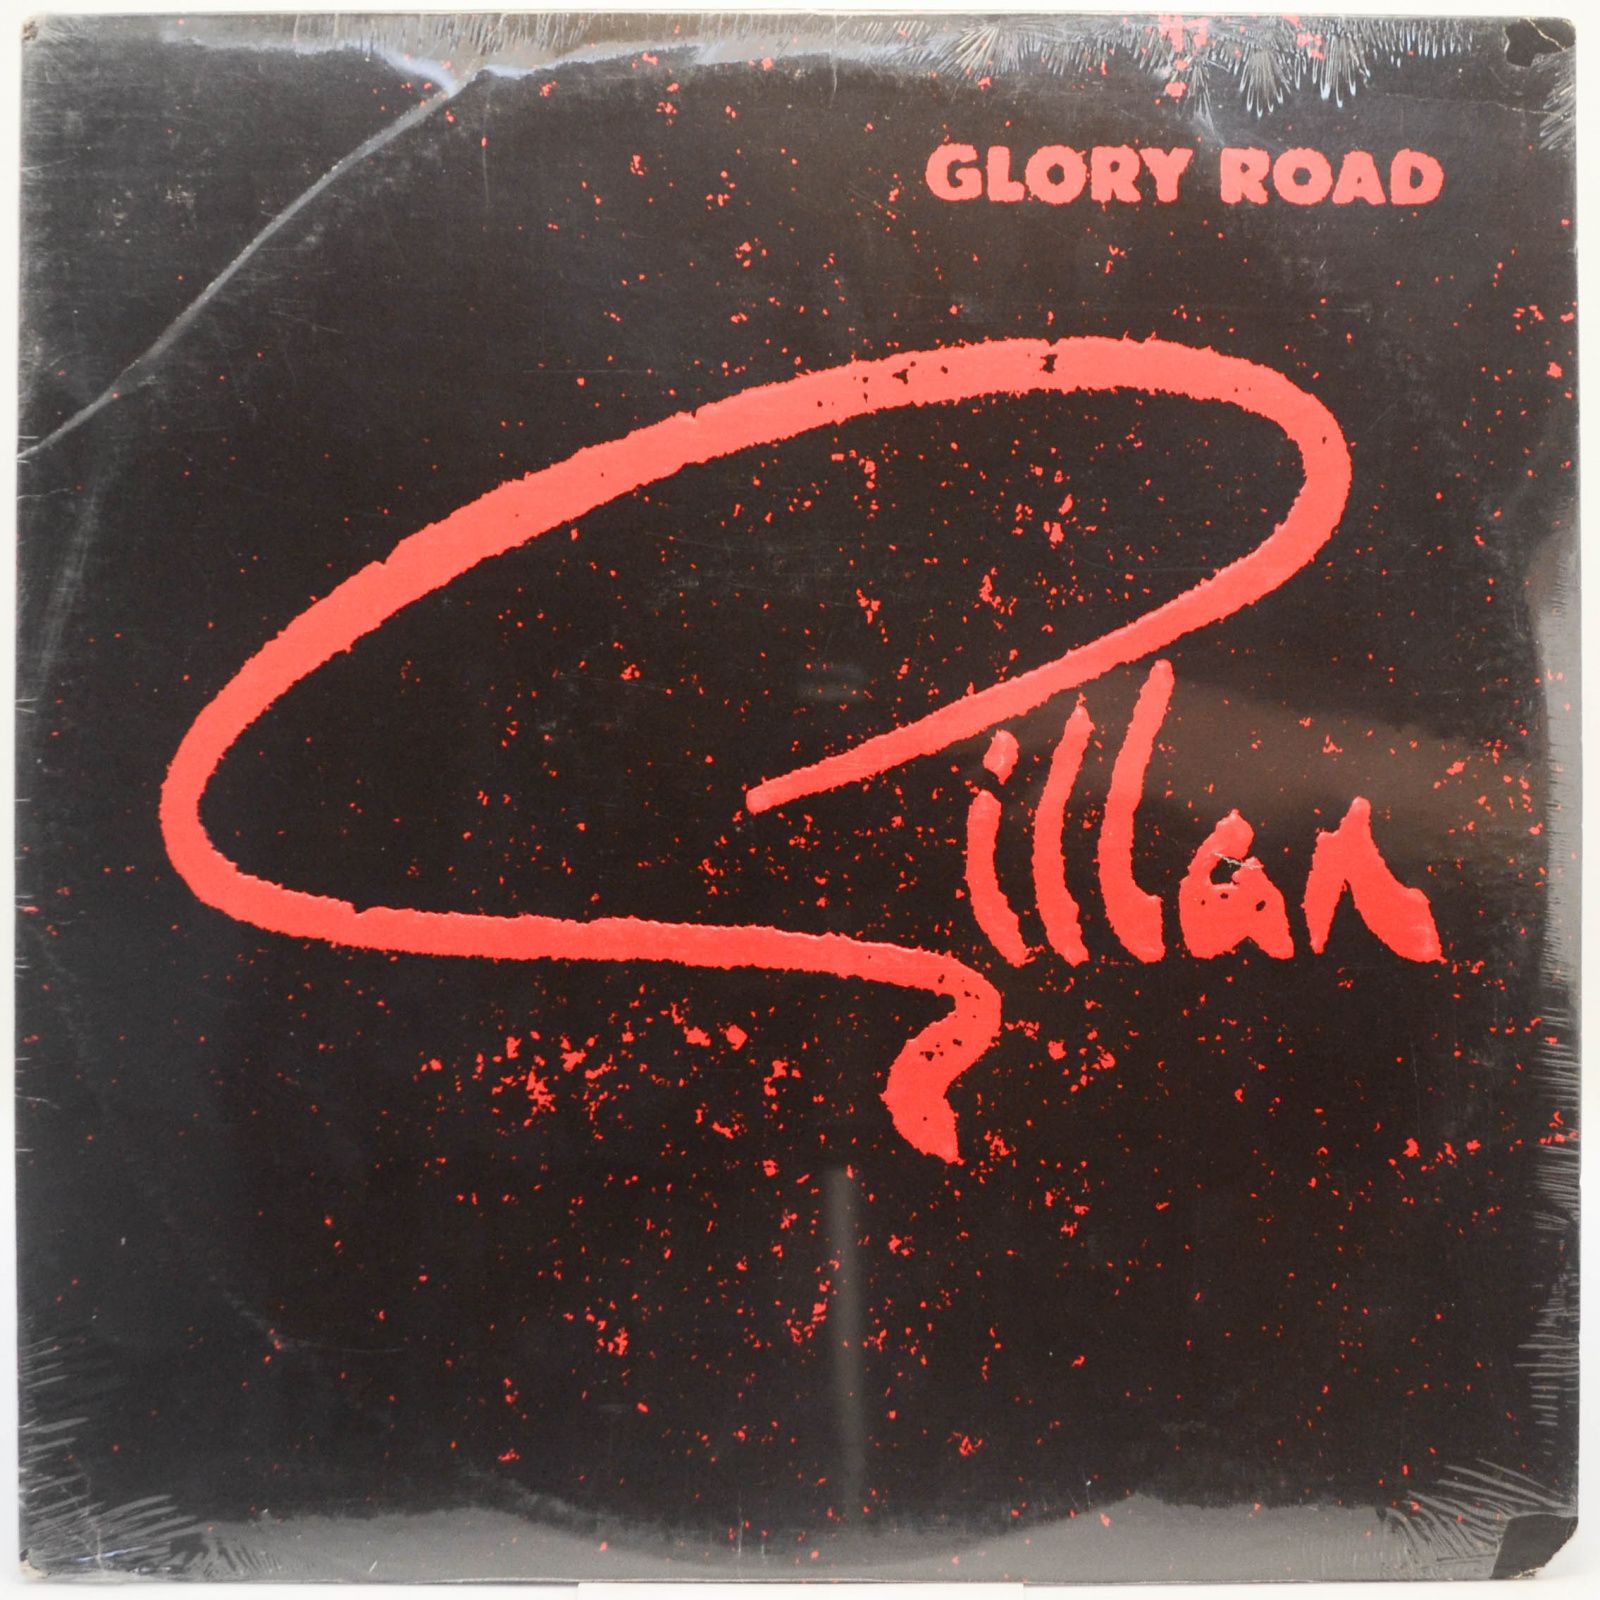 Glory Road (USA), 1980